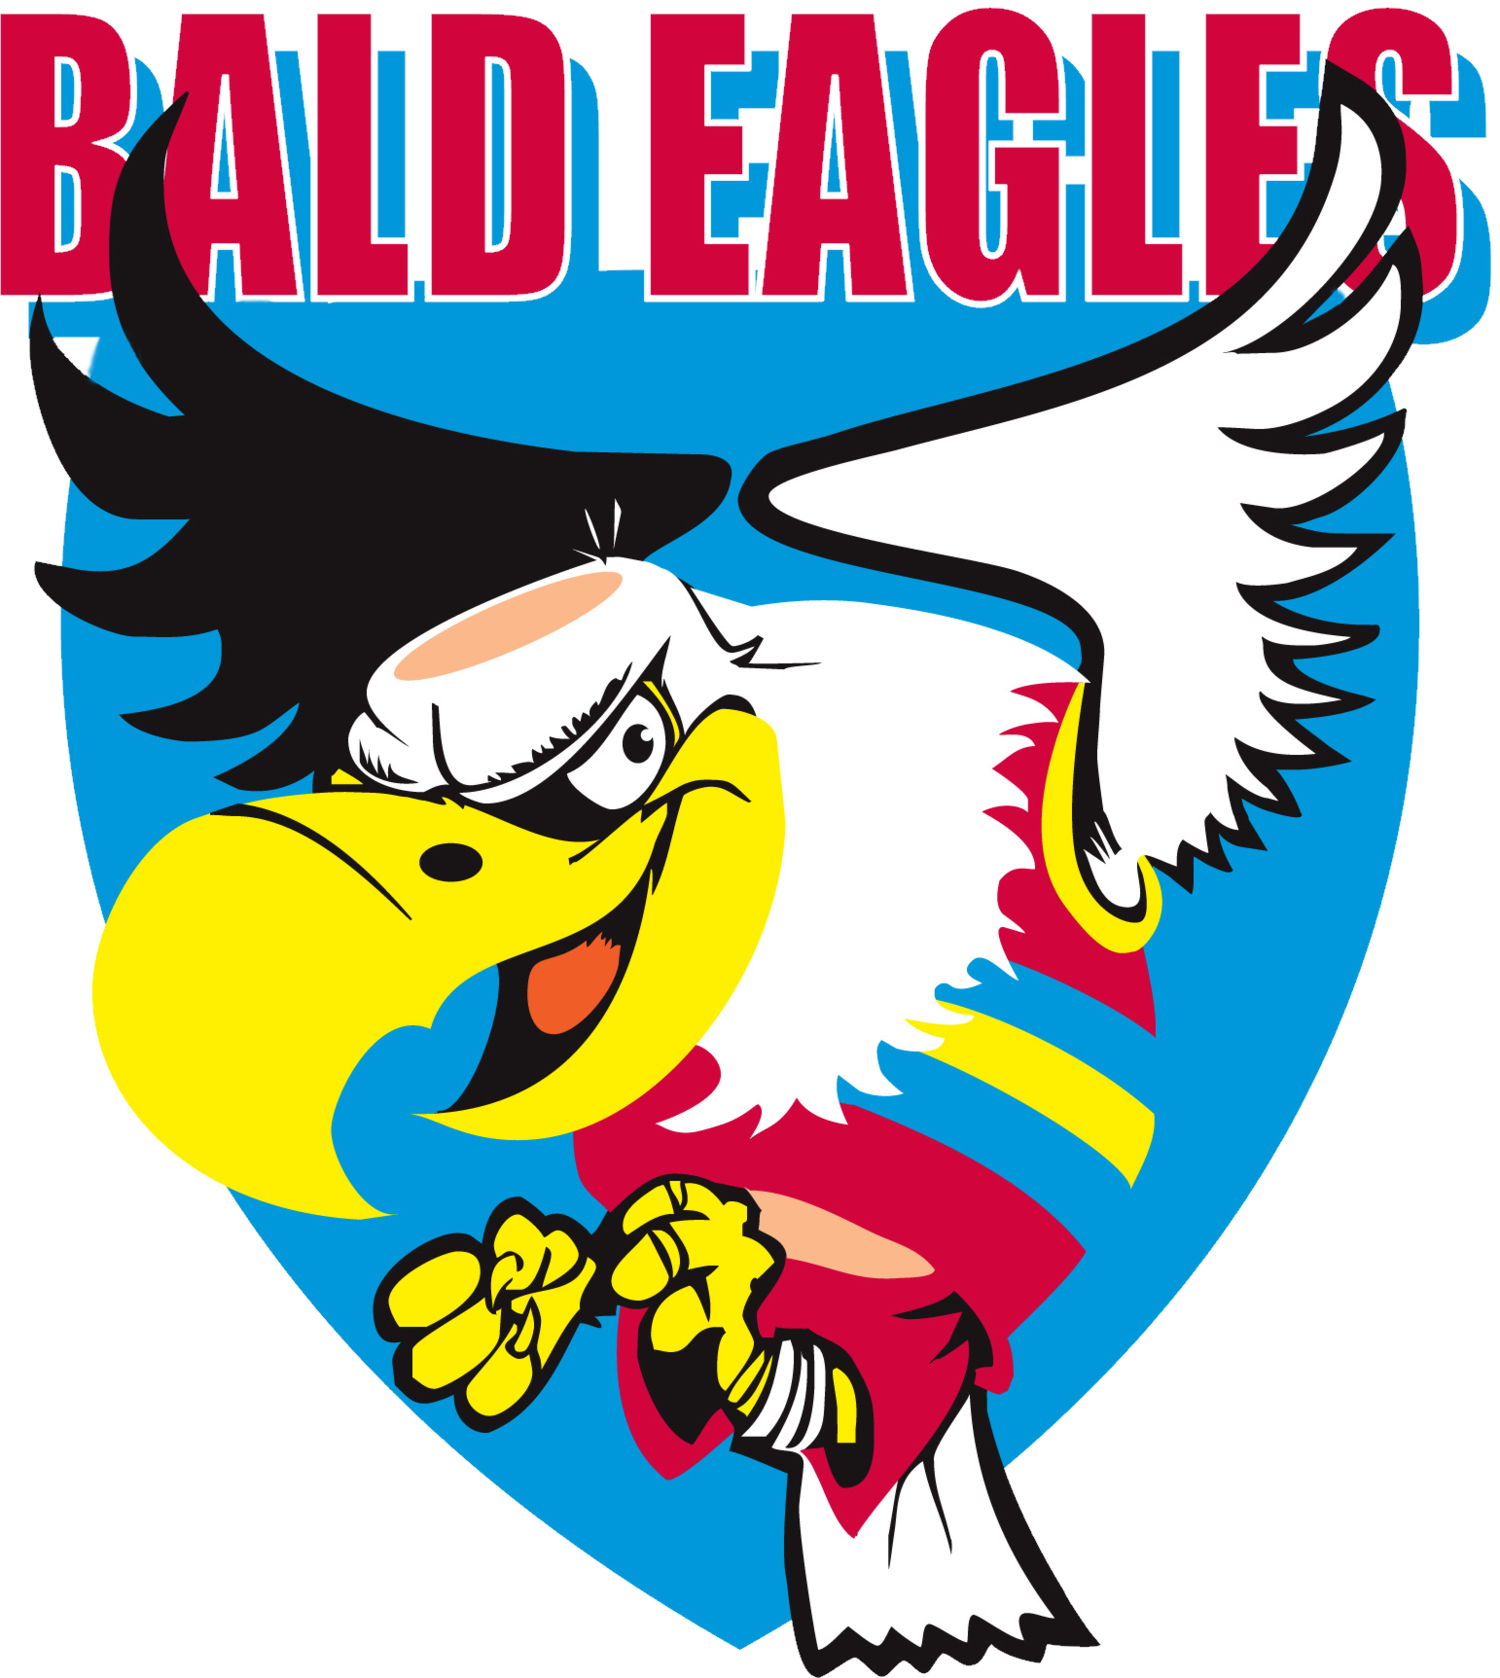 Marcellin Bald Eagles Football Club